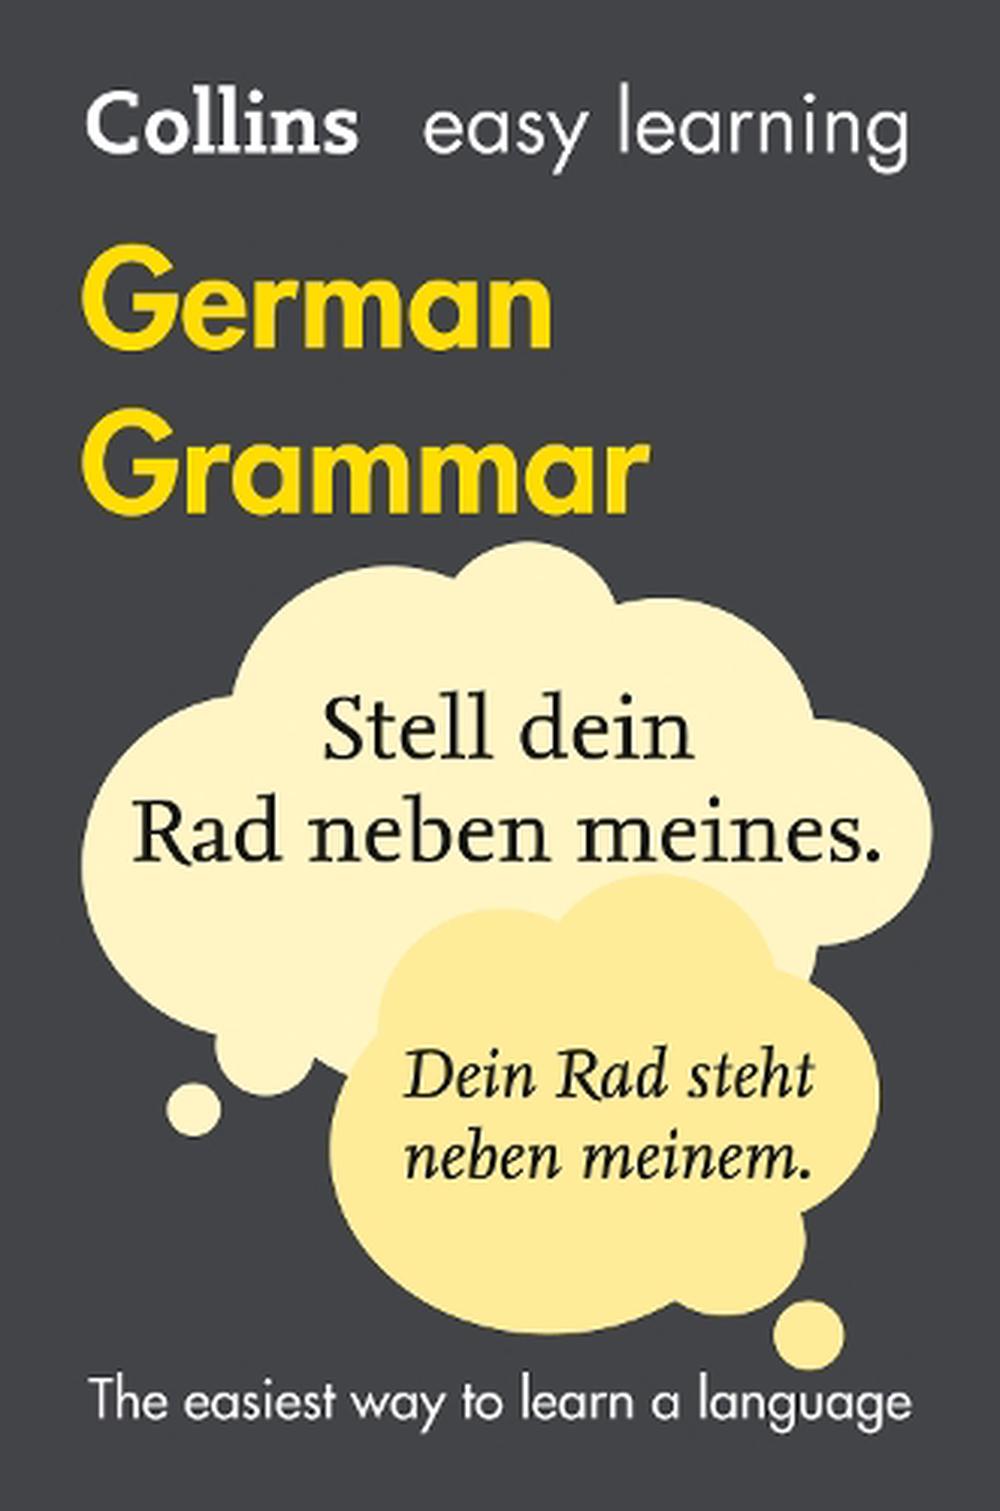 authoritative german grammar books